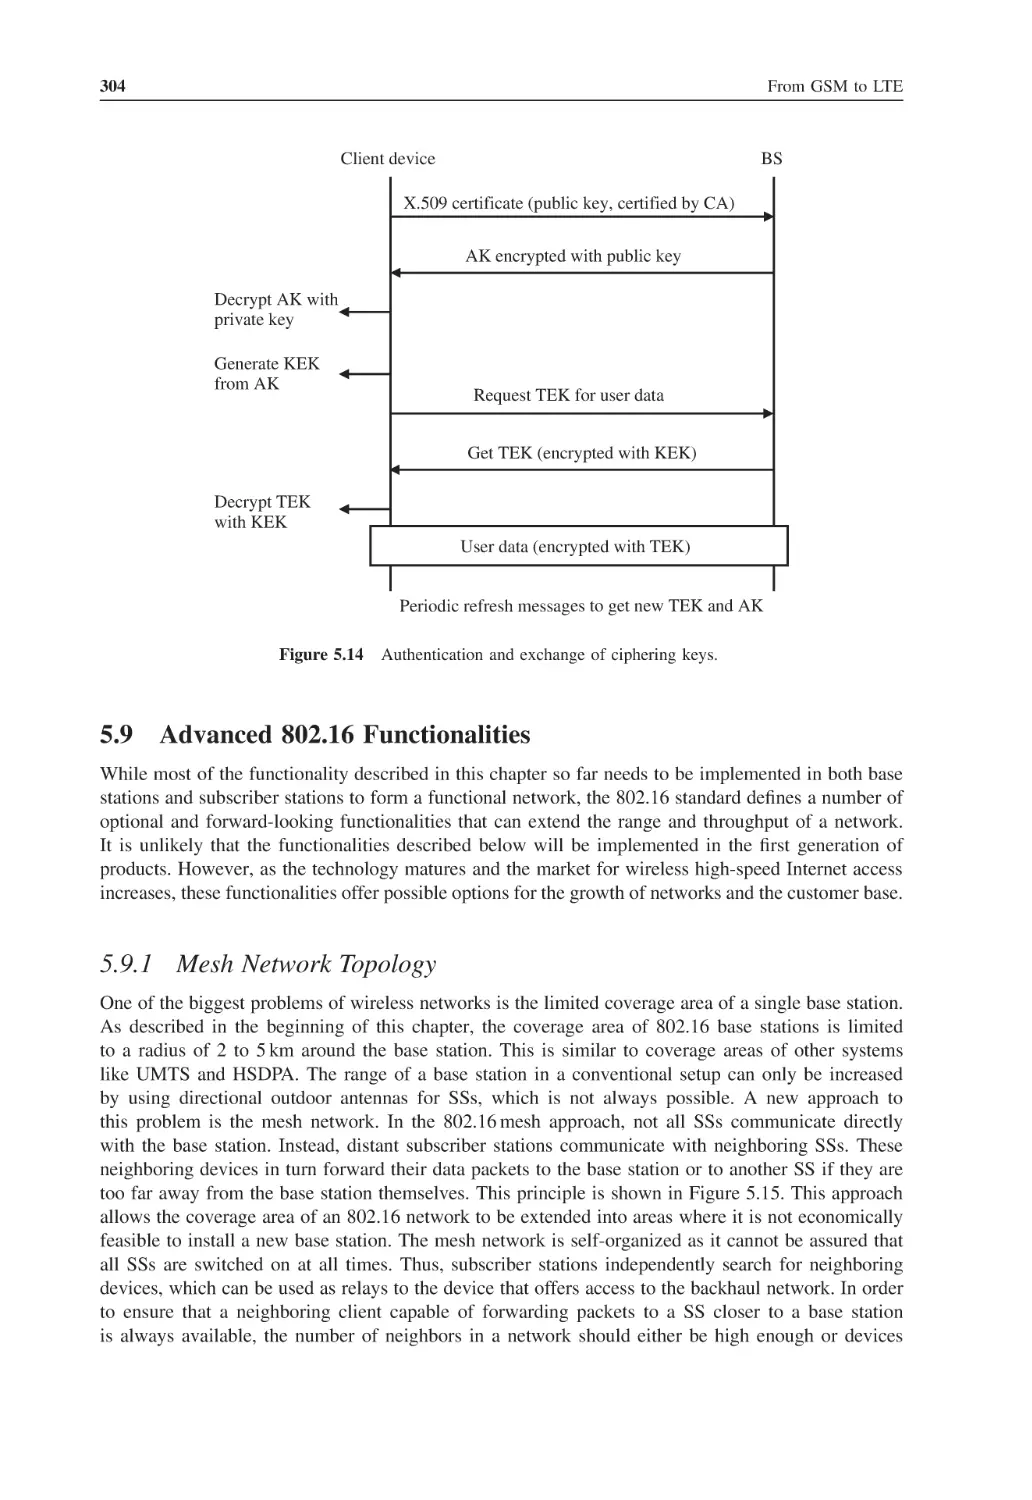 5.9 Advanced 802.16 Functionalities
5.9.1 Mesh Network Topology